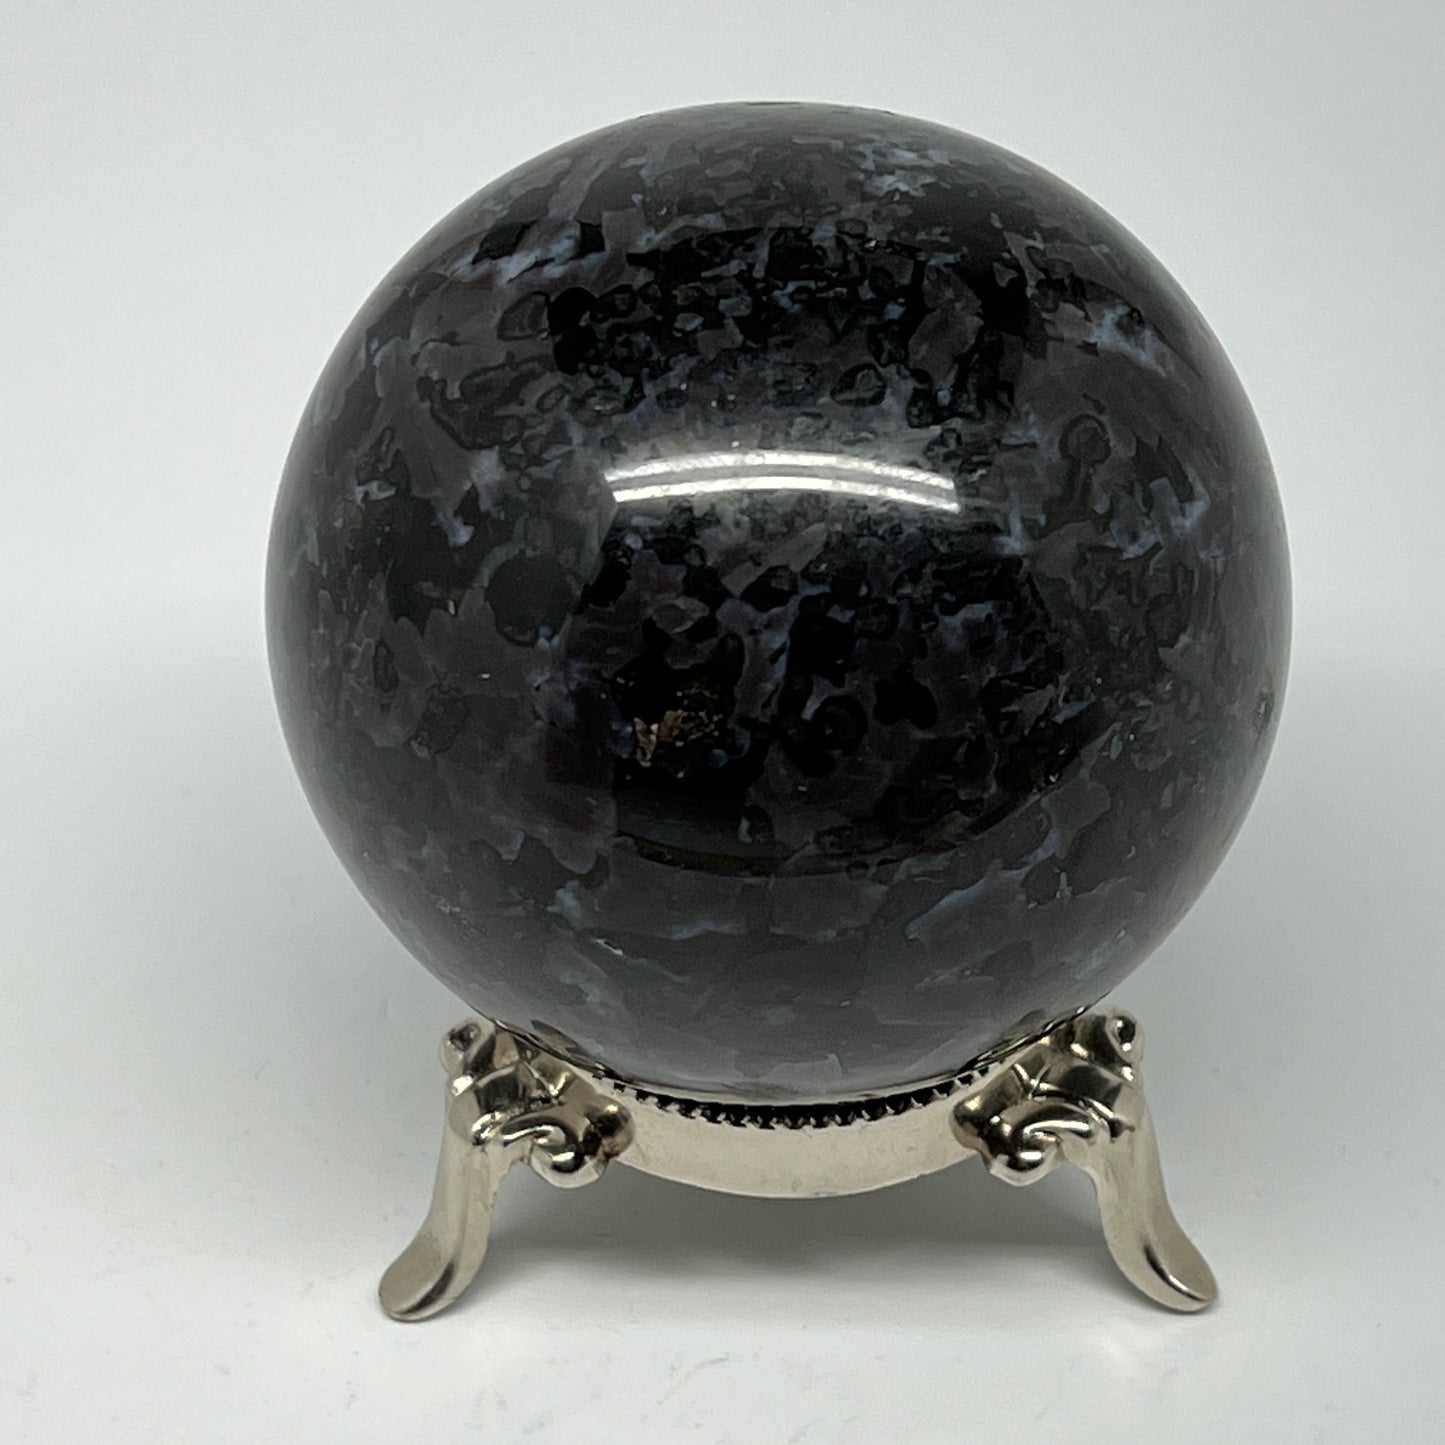 610g,2.9" (72mm) Indigo Gabbro Spheres Merlinite Gemstone @Madagascar,B19791